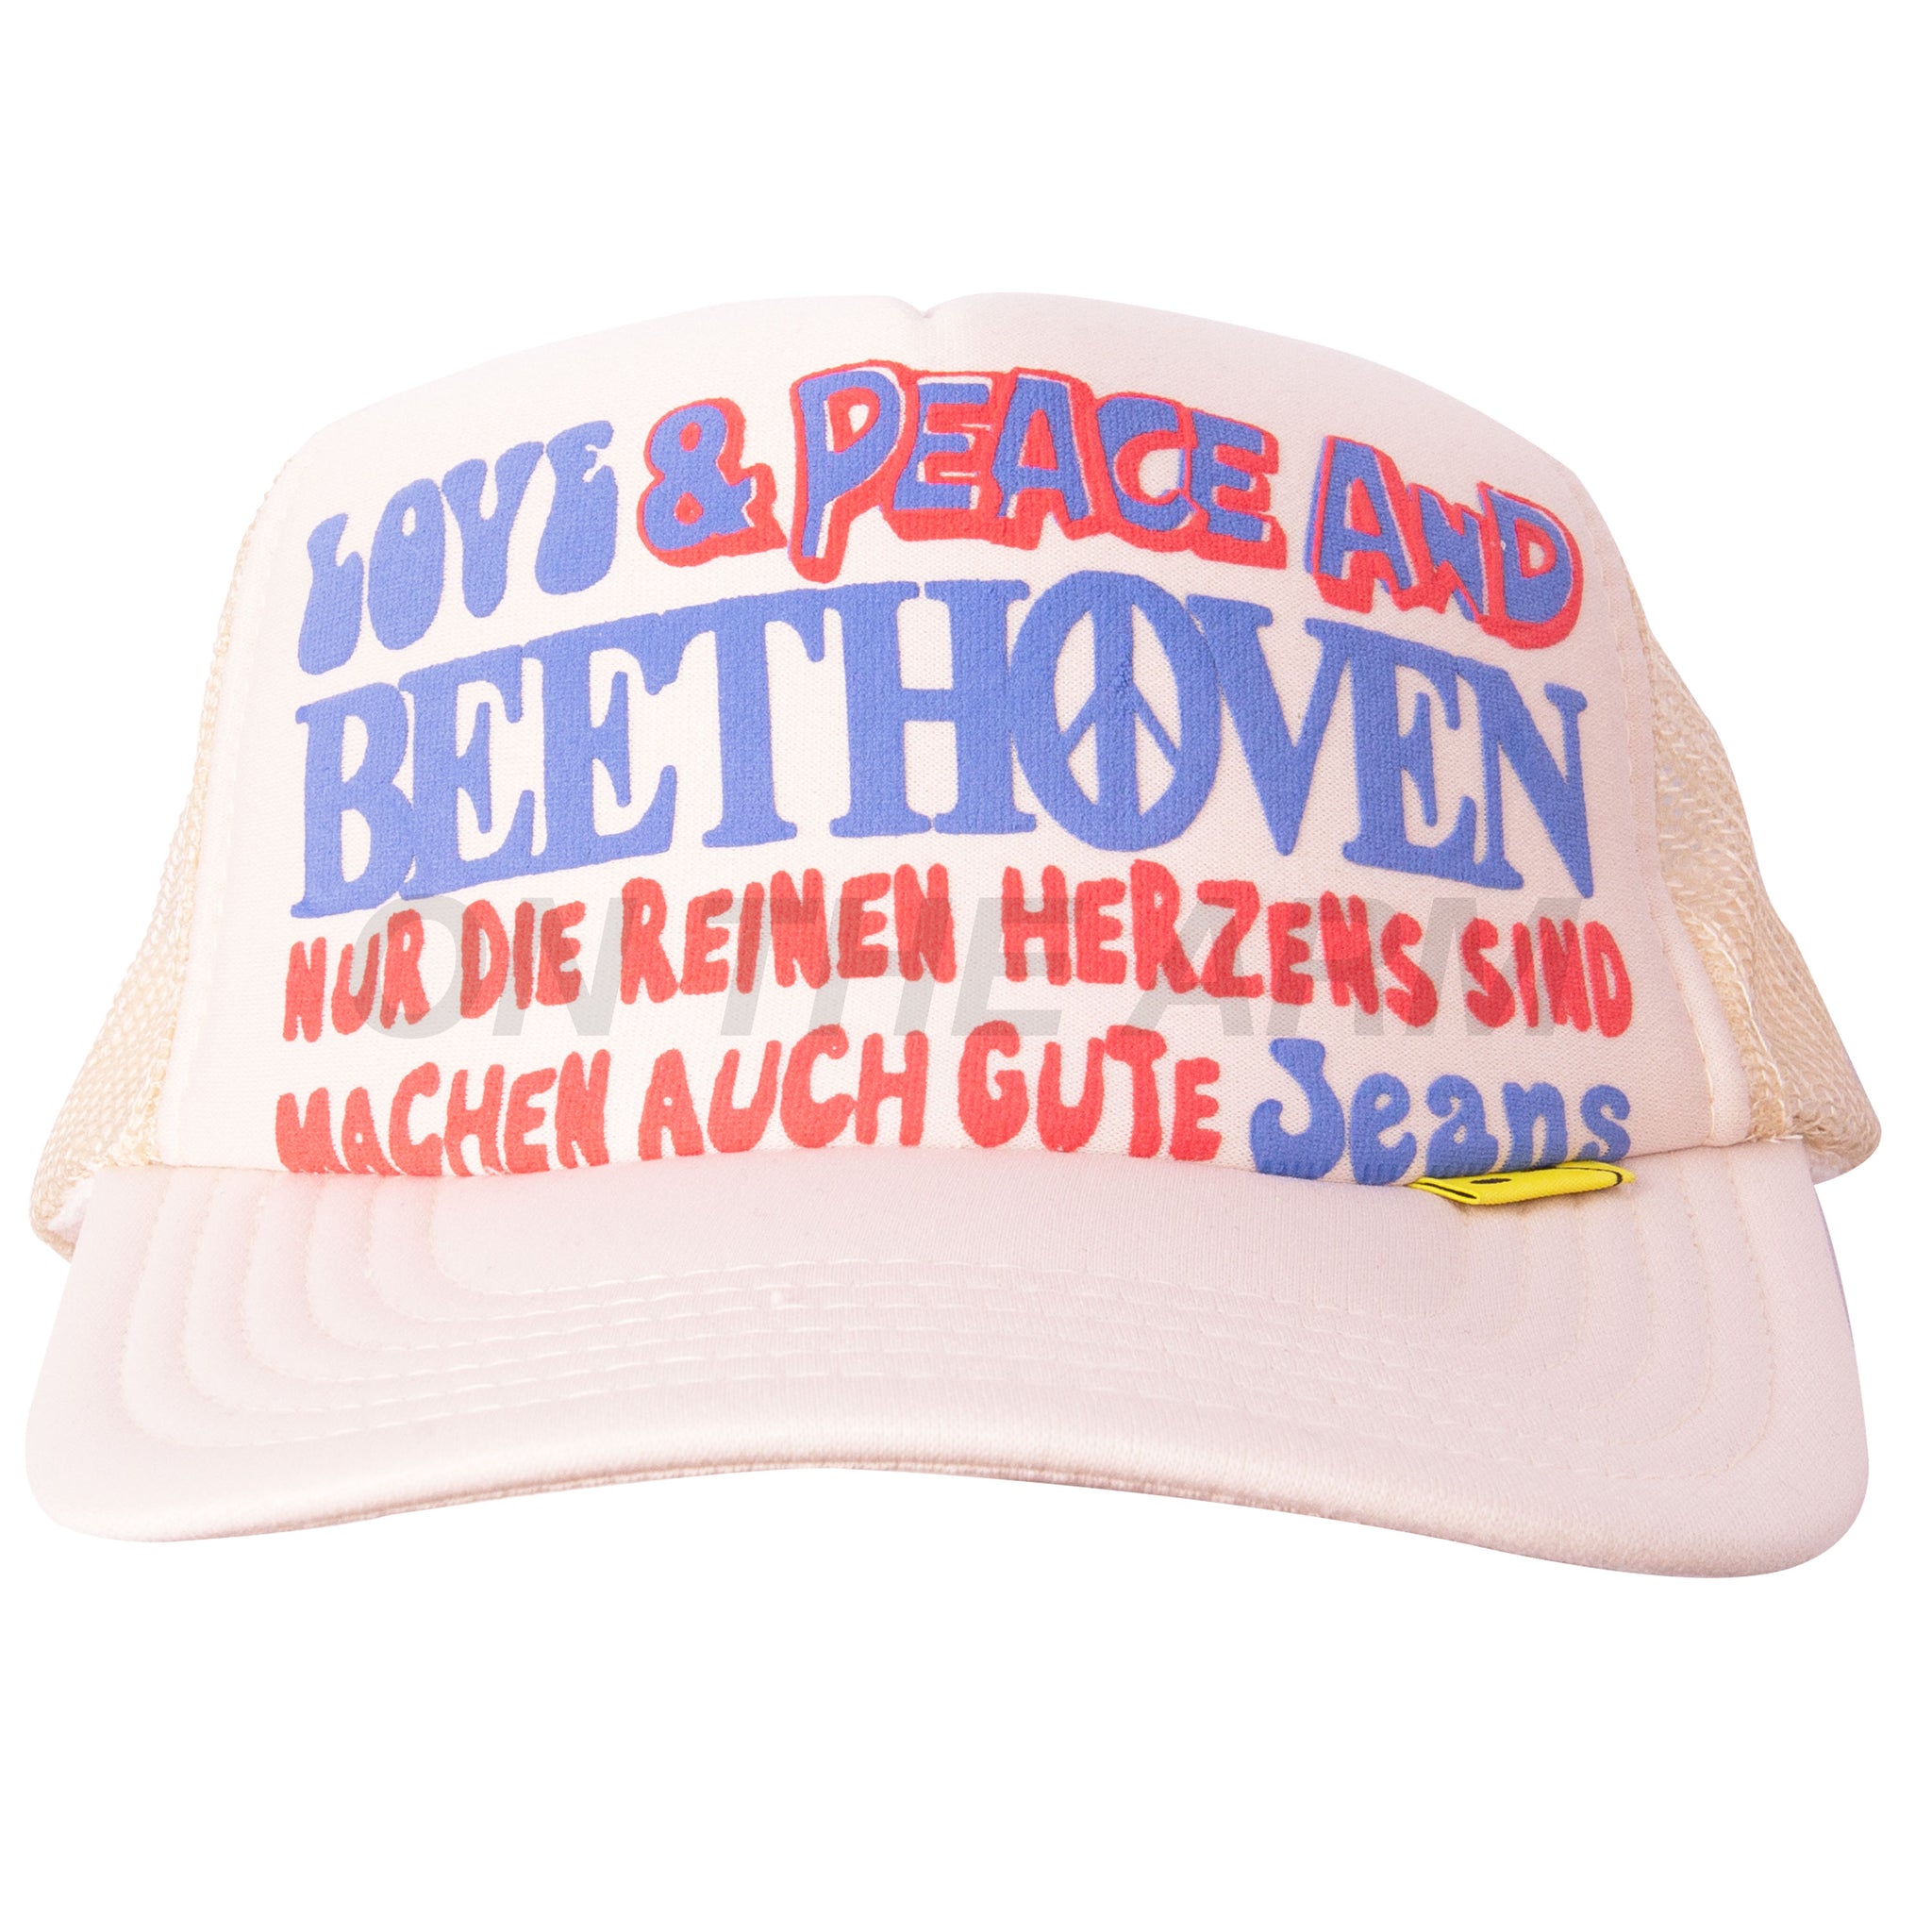 Kapital Kinari Beethoven Trucker Hat